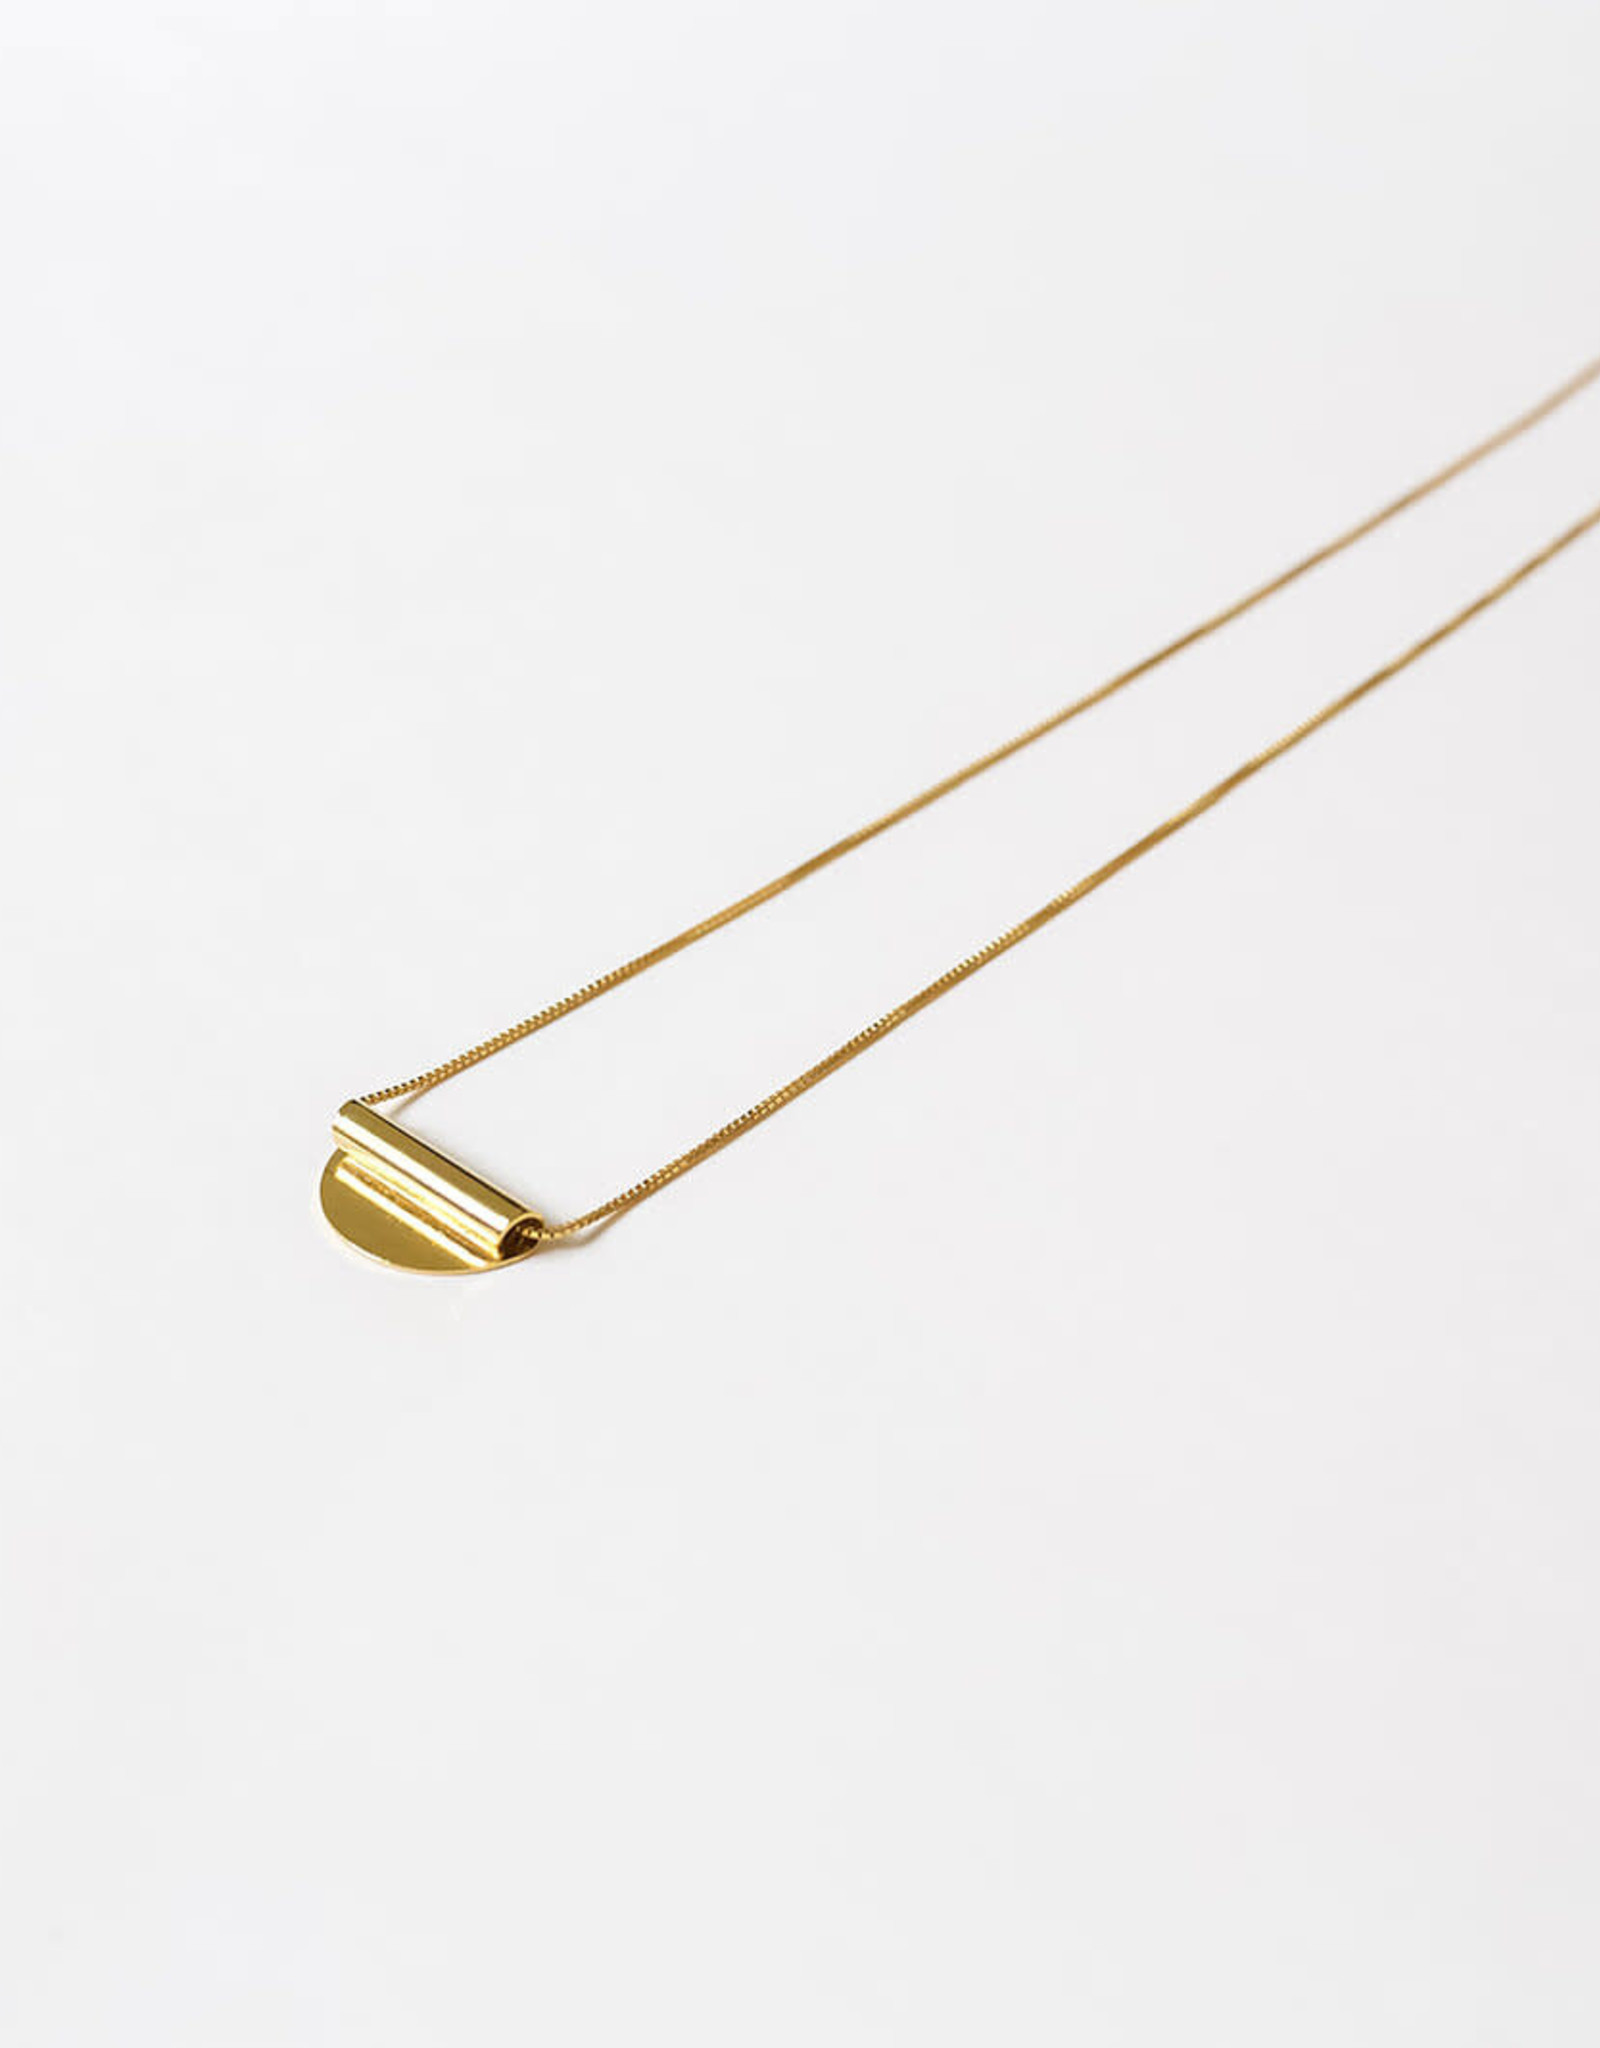 Elizabeth Lyn Jewelry Ltd. Alina Gold Necklace - 18"